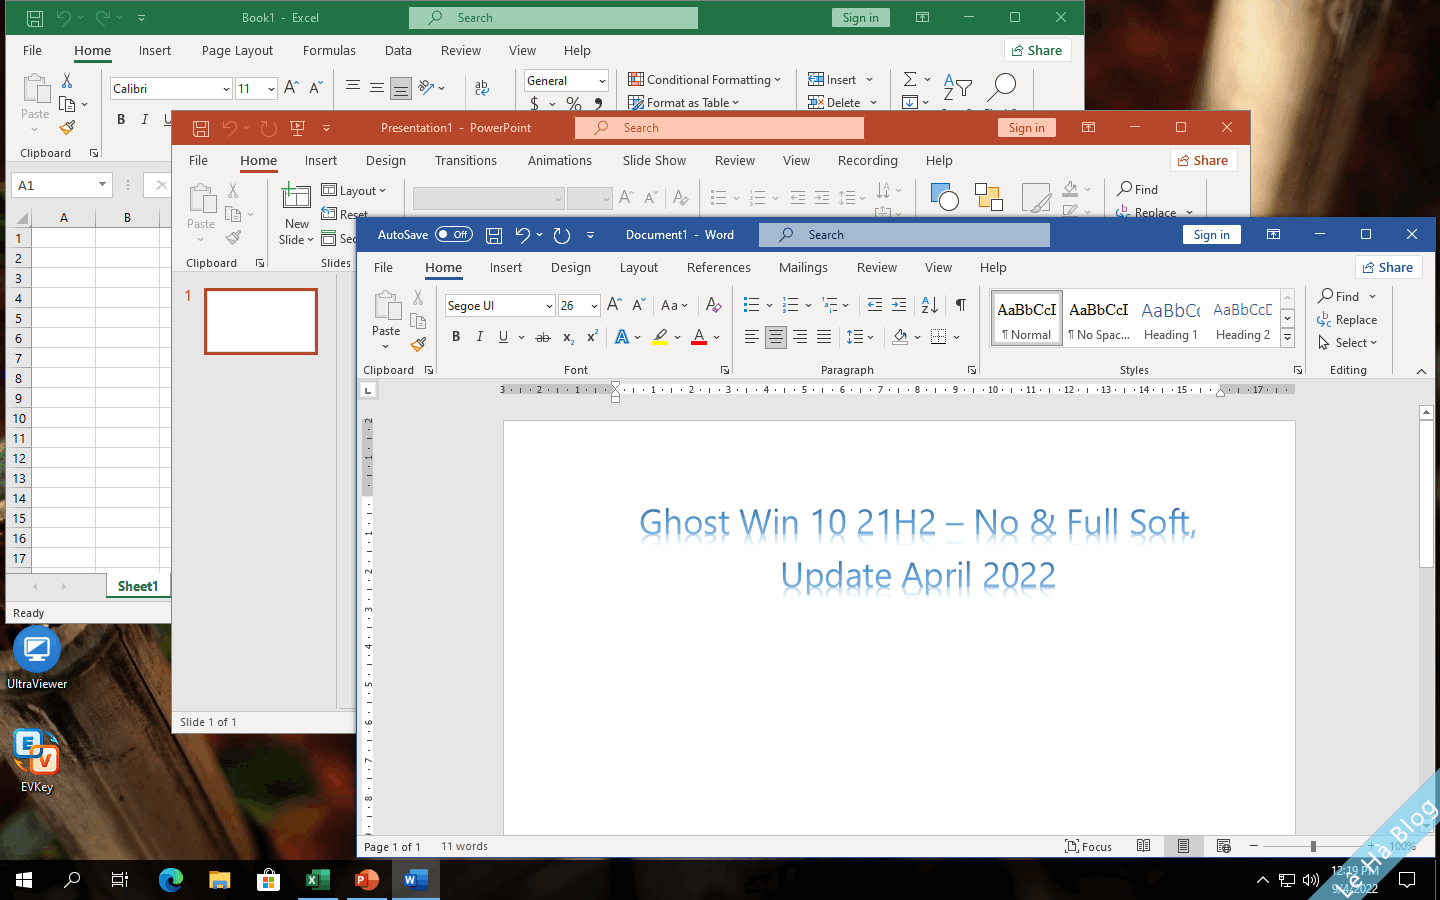 Ghost Windows 10 21H2 – No & Full Soft, April 2022